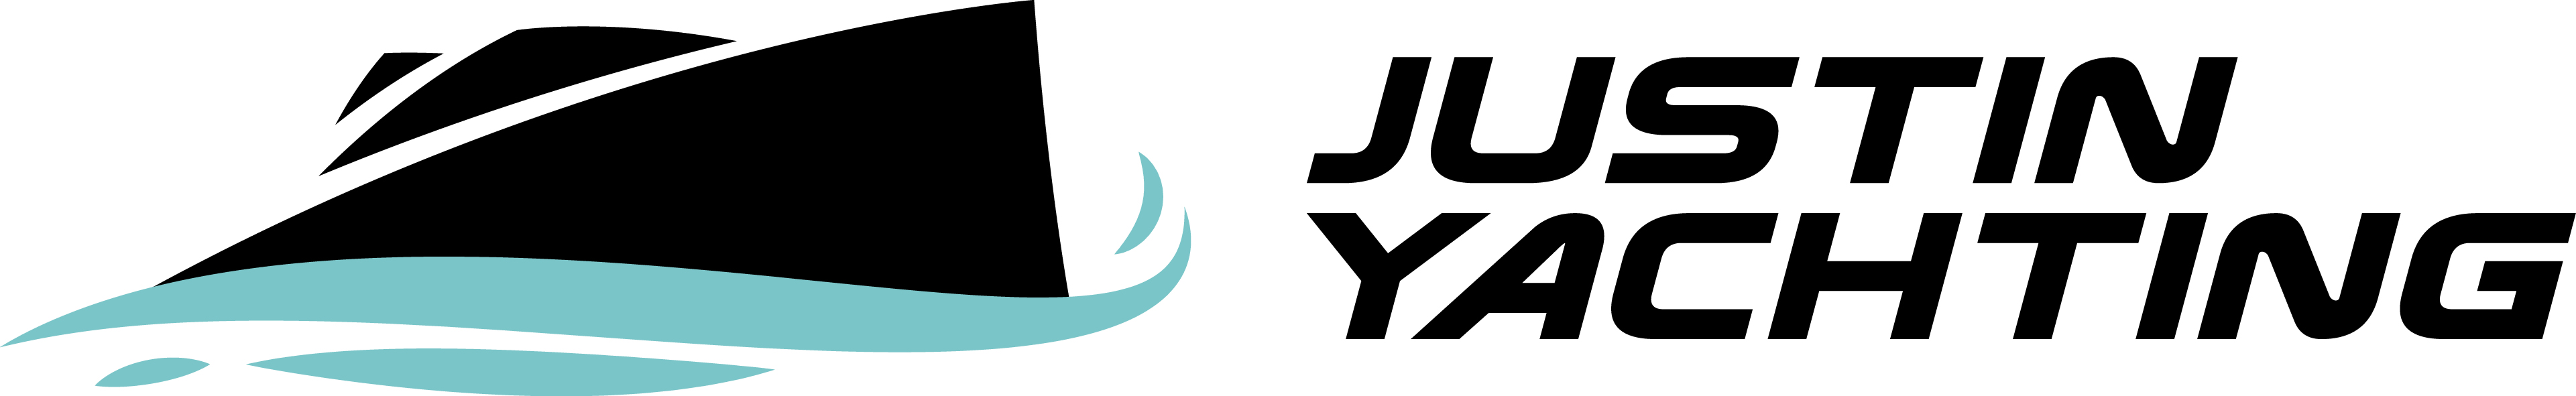 Justin Yachting's Logo